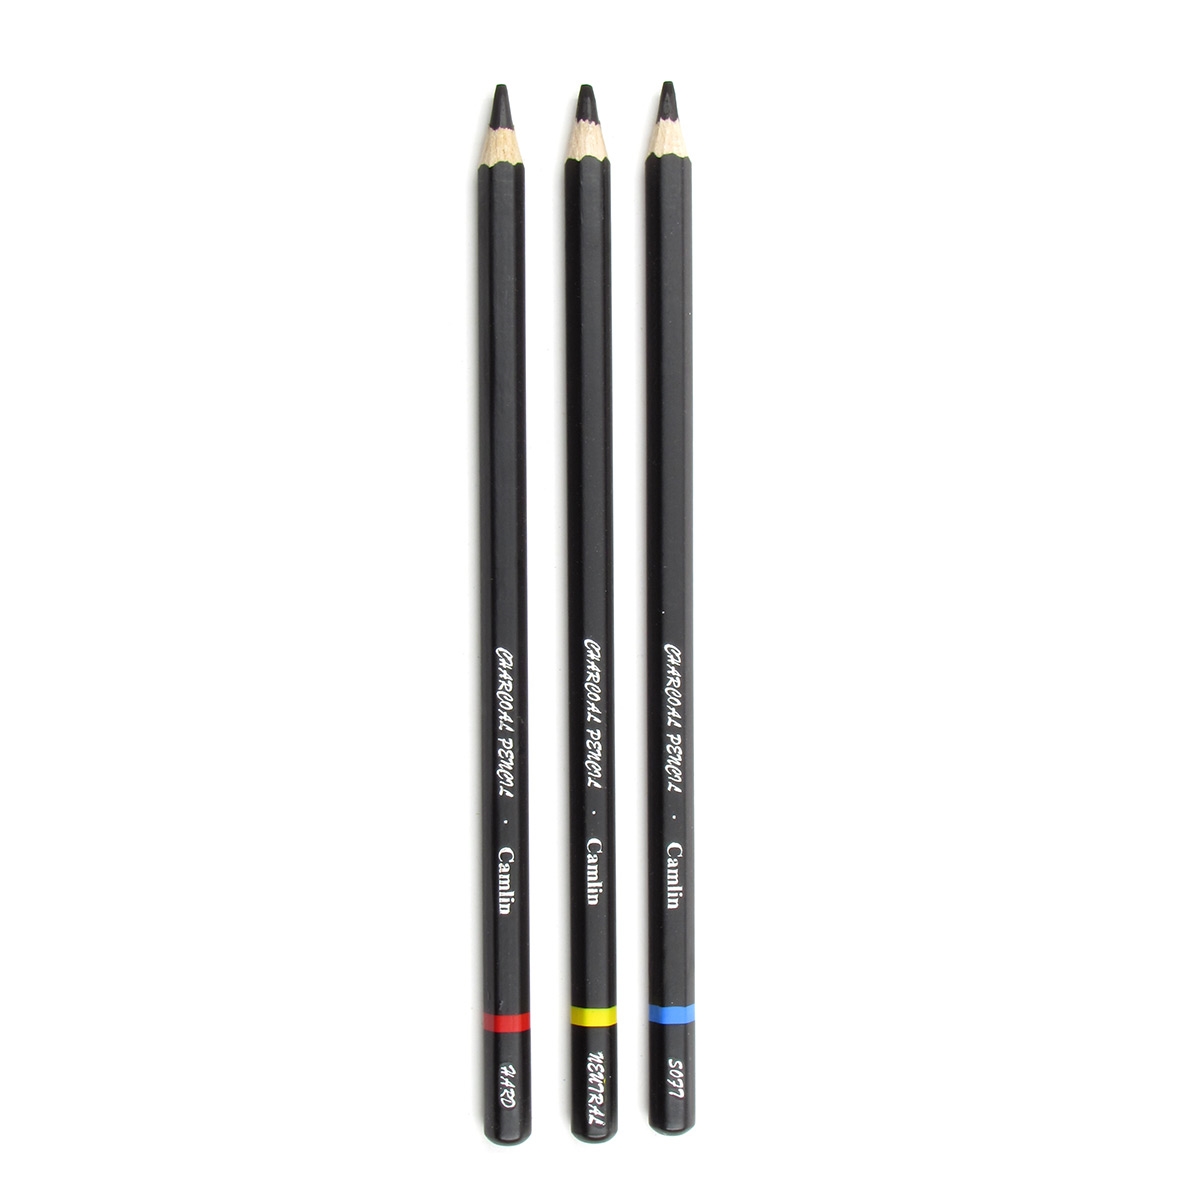 Hindustan Trading Company Camlin Charcoal Pencil Set of 3